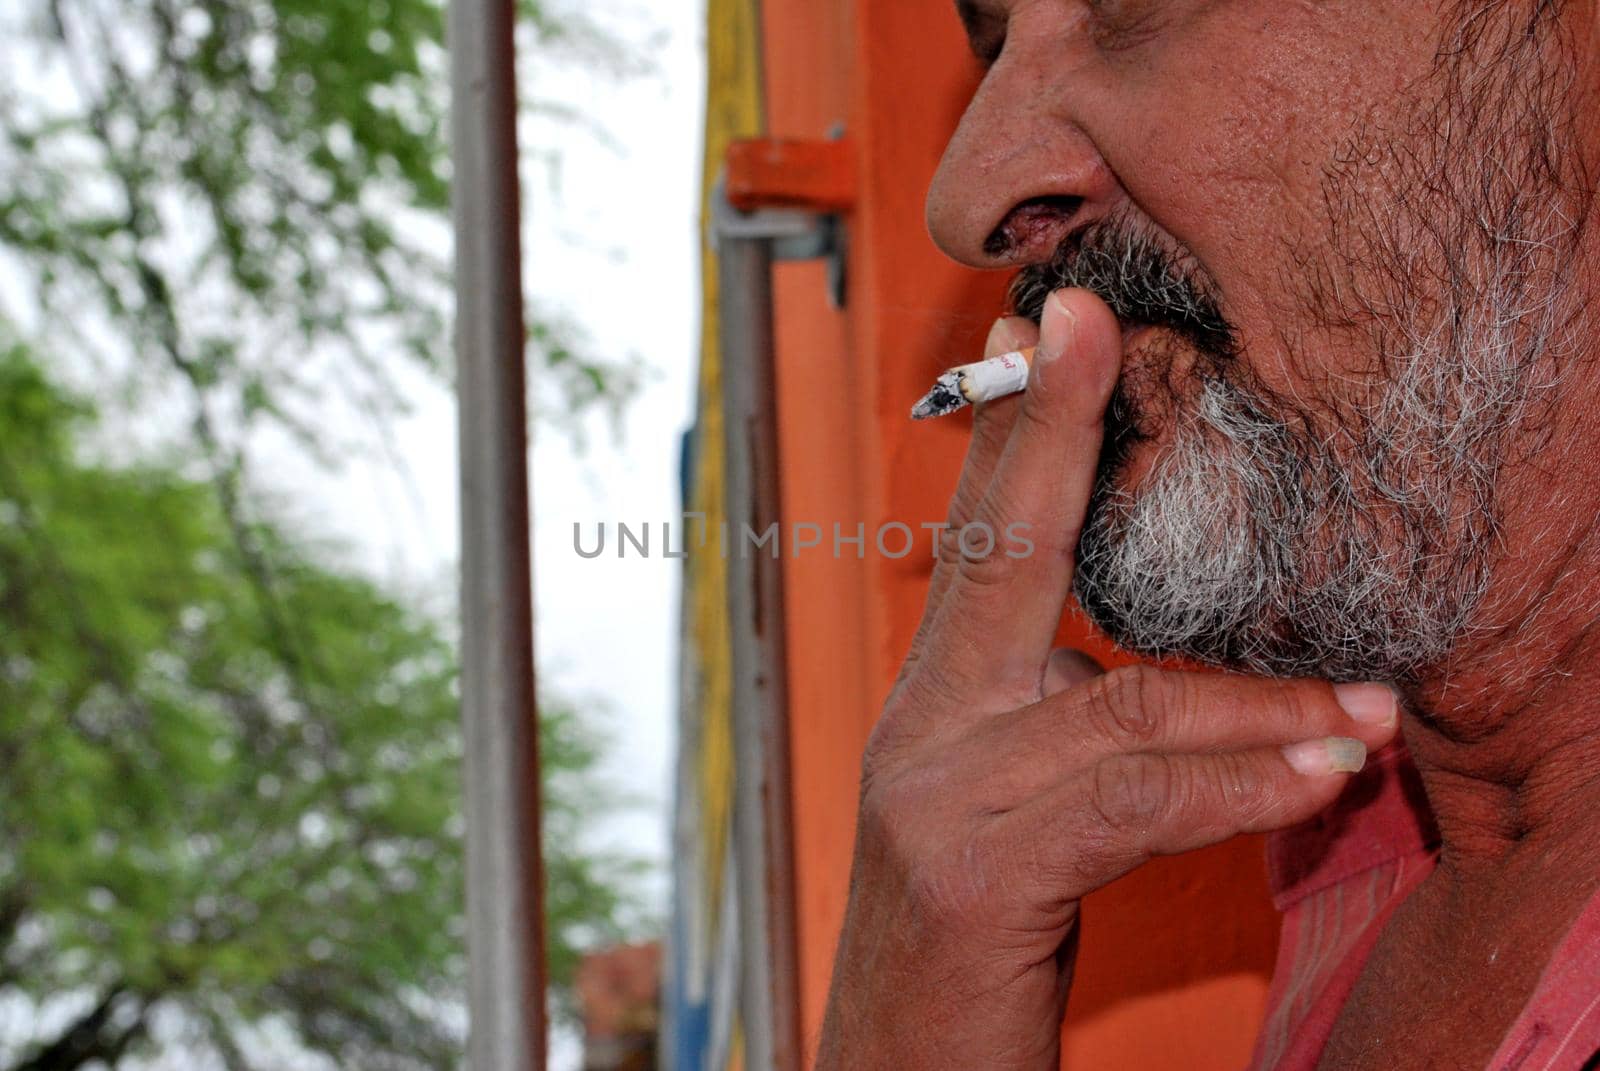 eunapolis, bahia / brazil - june 21, 2008: a person is seen smoking a cigarette in the city of Eunapolis.





